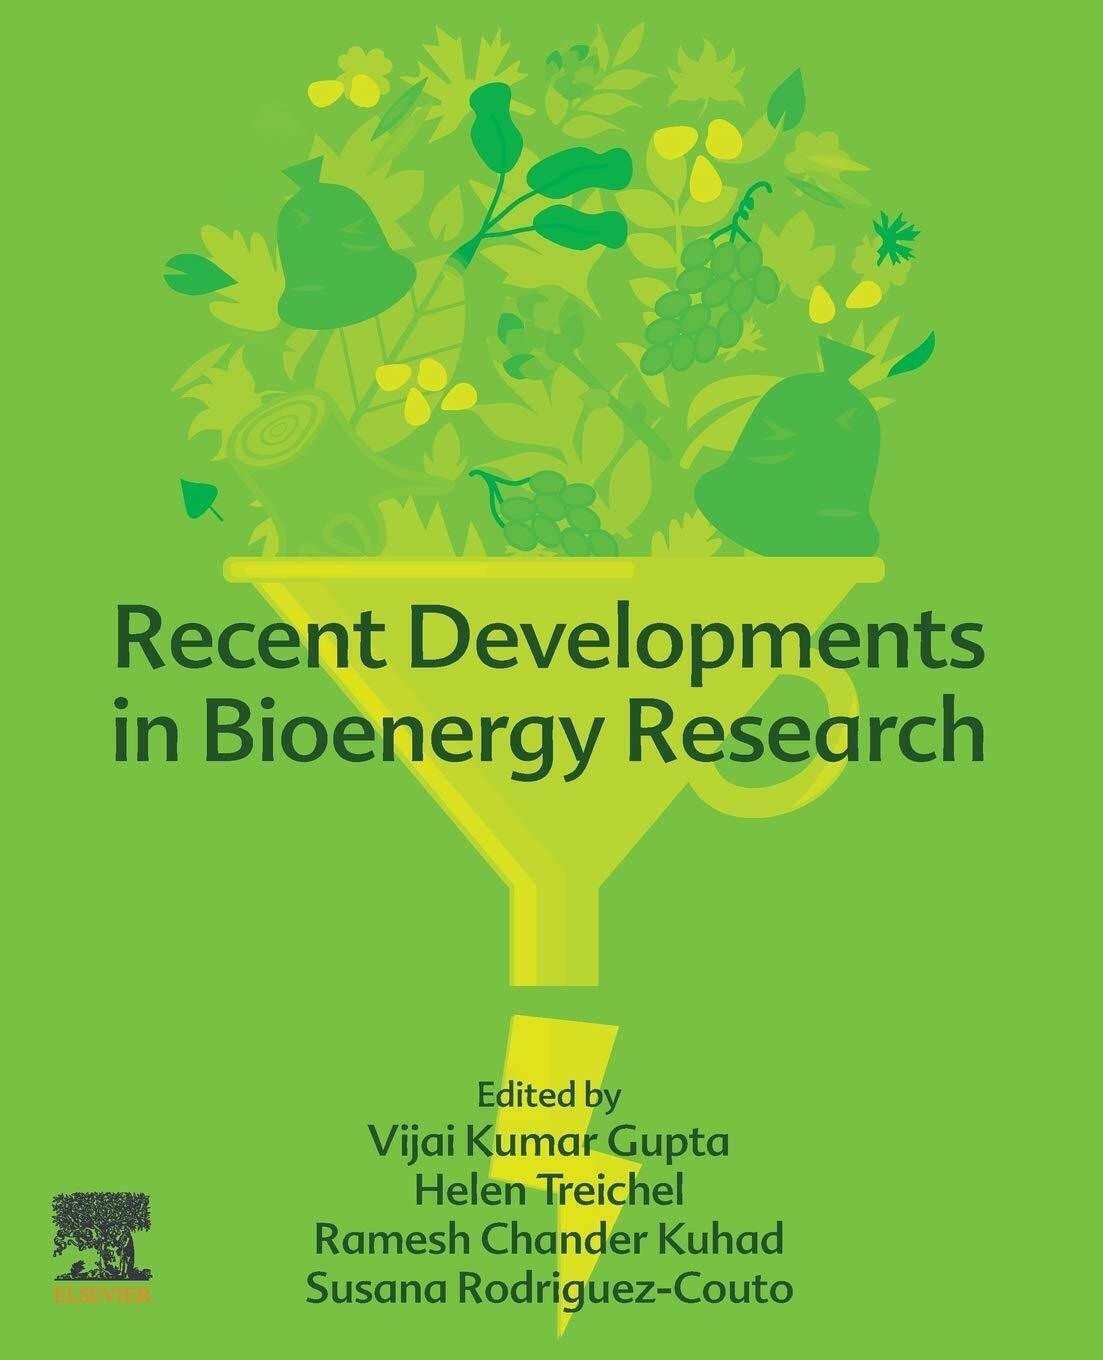 Recent Developments in Bioenergy Research - Vijai G. Gupta - Elsevier, 2020